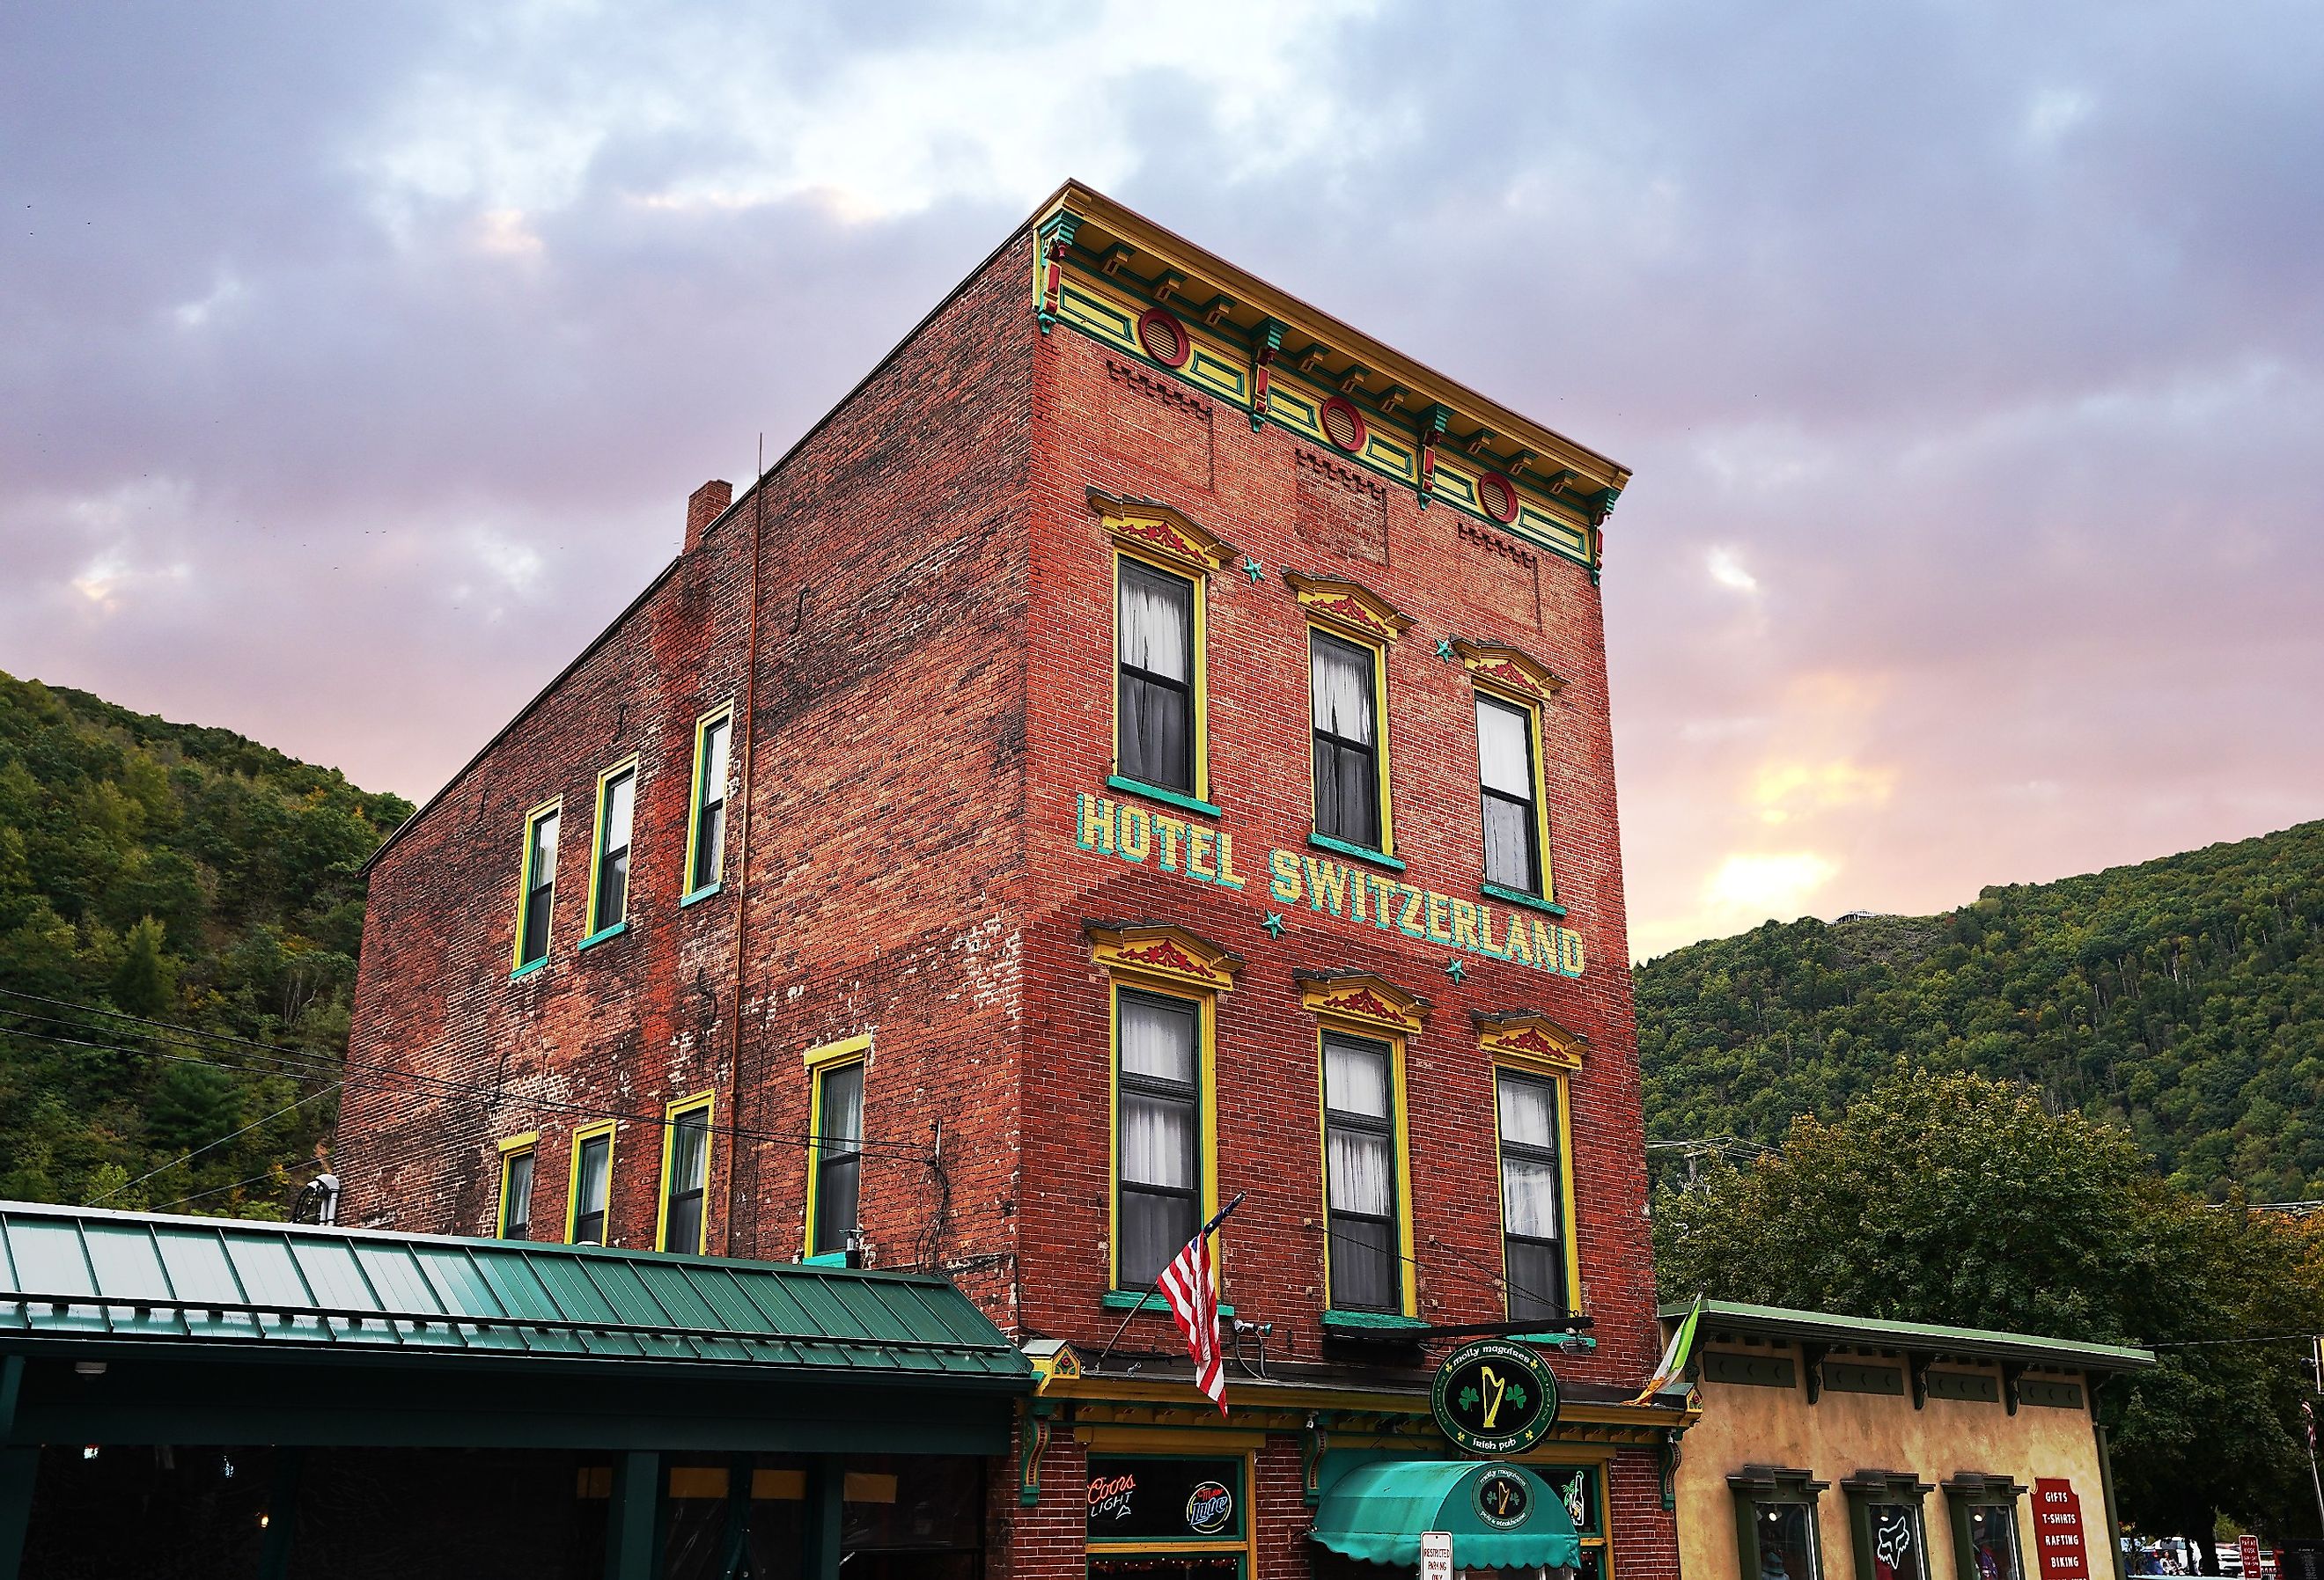 Historic downtown Jim Thorpe Pennsylvania in the Pocono Mountains. Image credit zimmytws via AdobeStock.